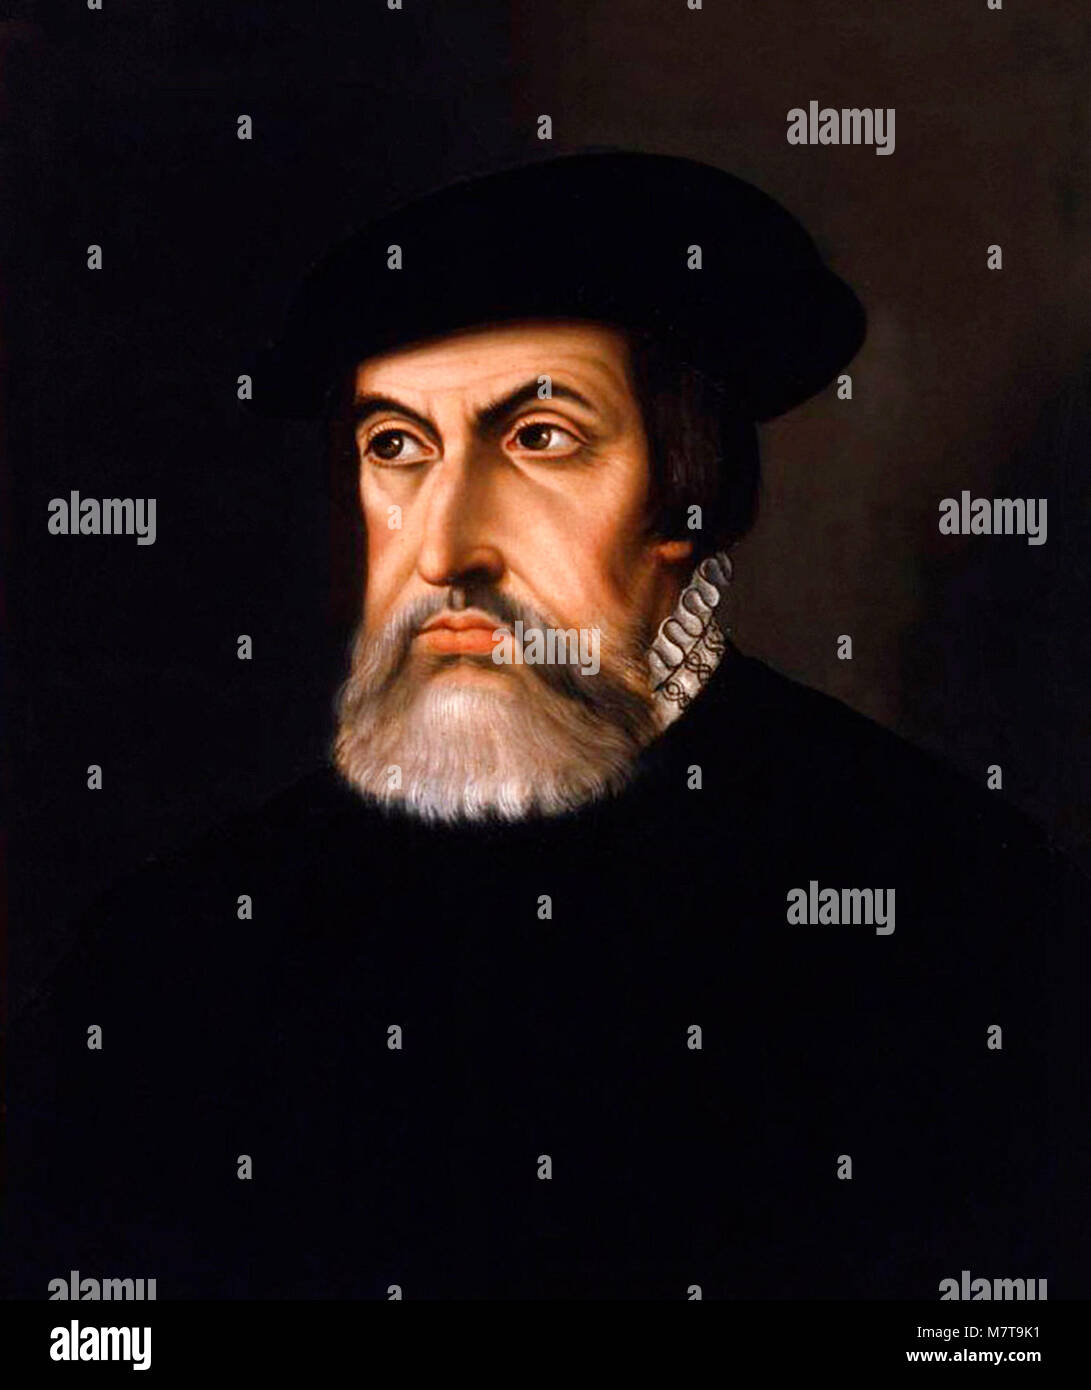 De Hernán Cortés Monroy Pizarro Altamirano y, Marquis de la vallée d'Oaxaca (1485-1547). Portrait de le conquistador espagnol Hernan Cortes,, huile sur toile, artiste inconnu, 18thC. Banque D'Images